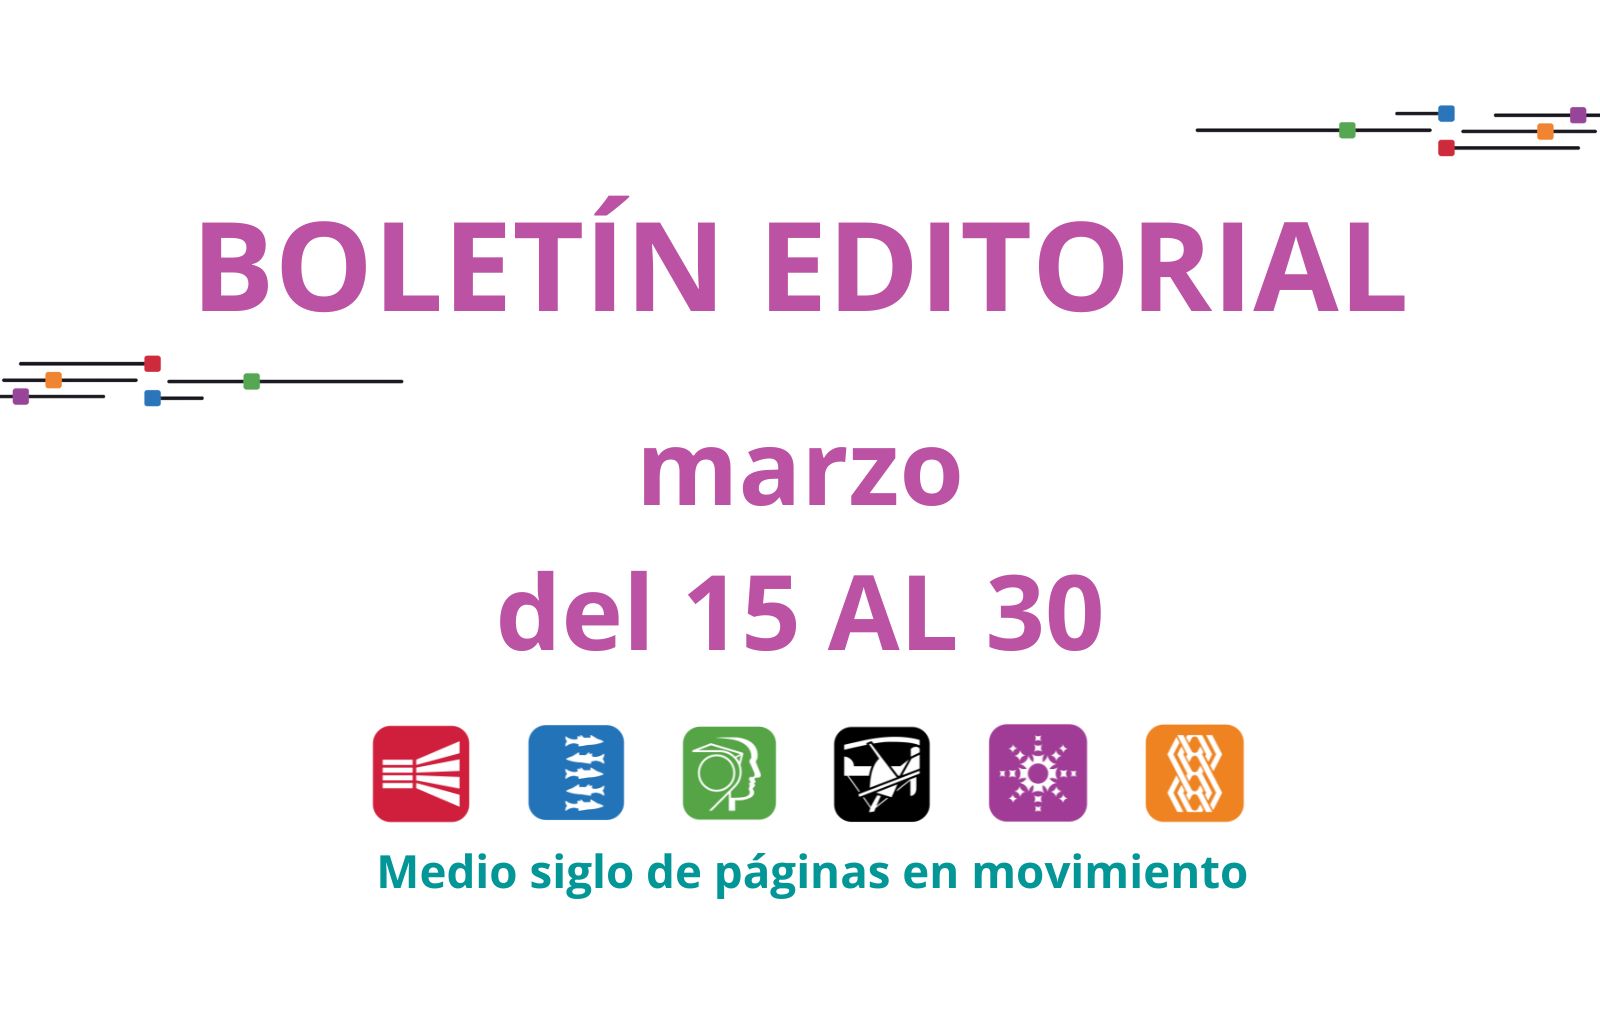 Boletín editorial LibrosUAM, núm. 16